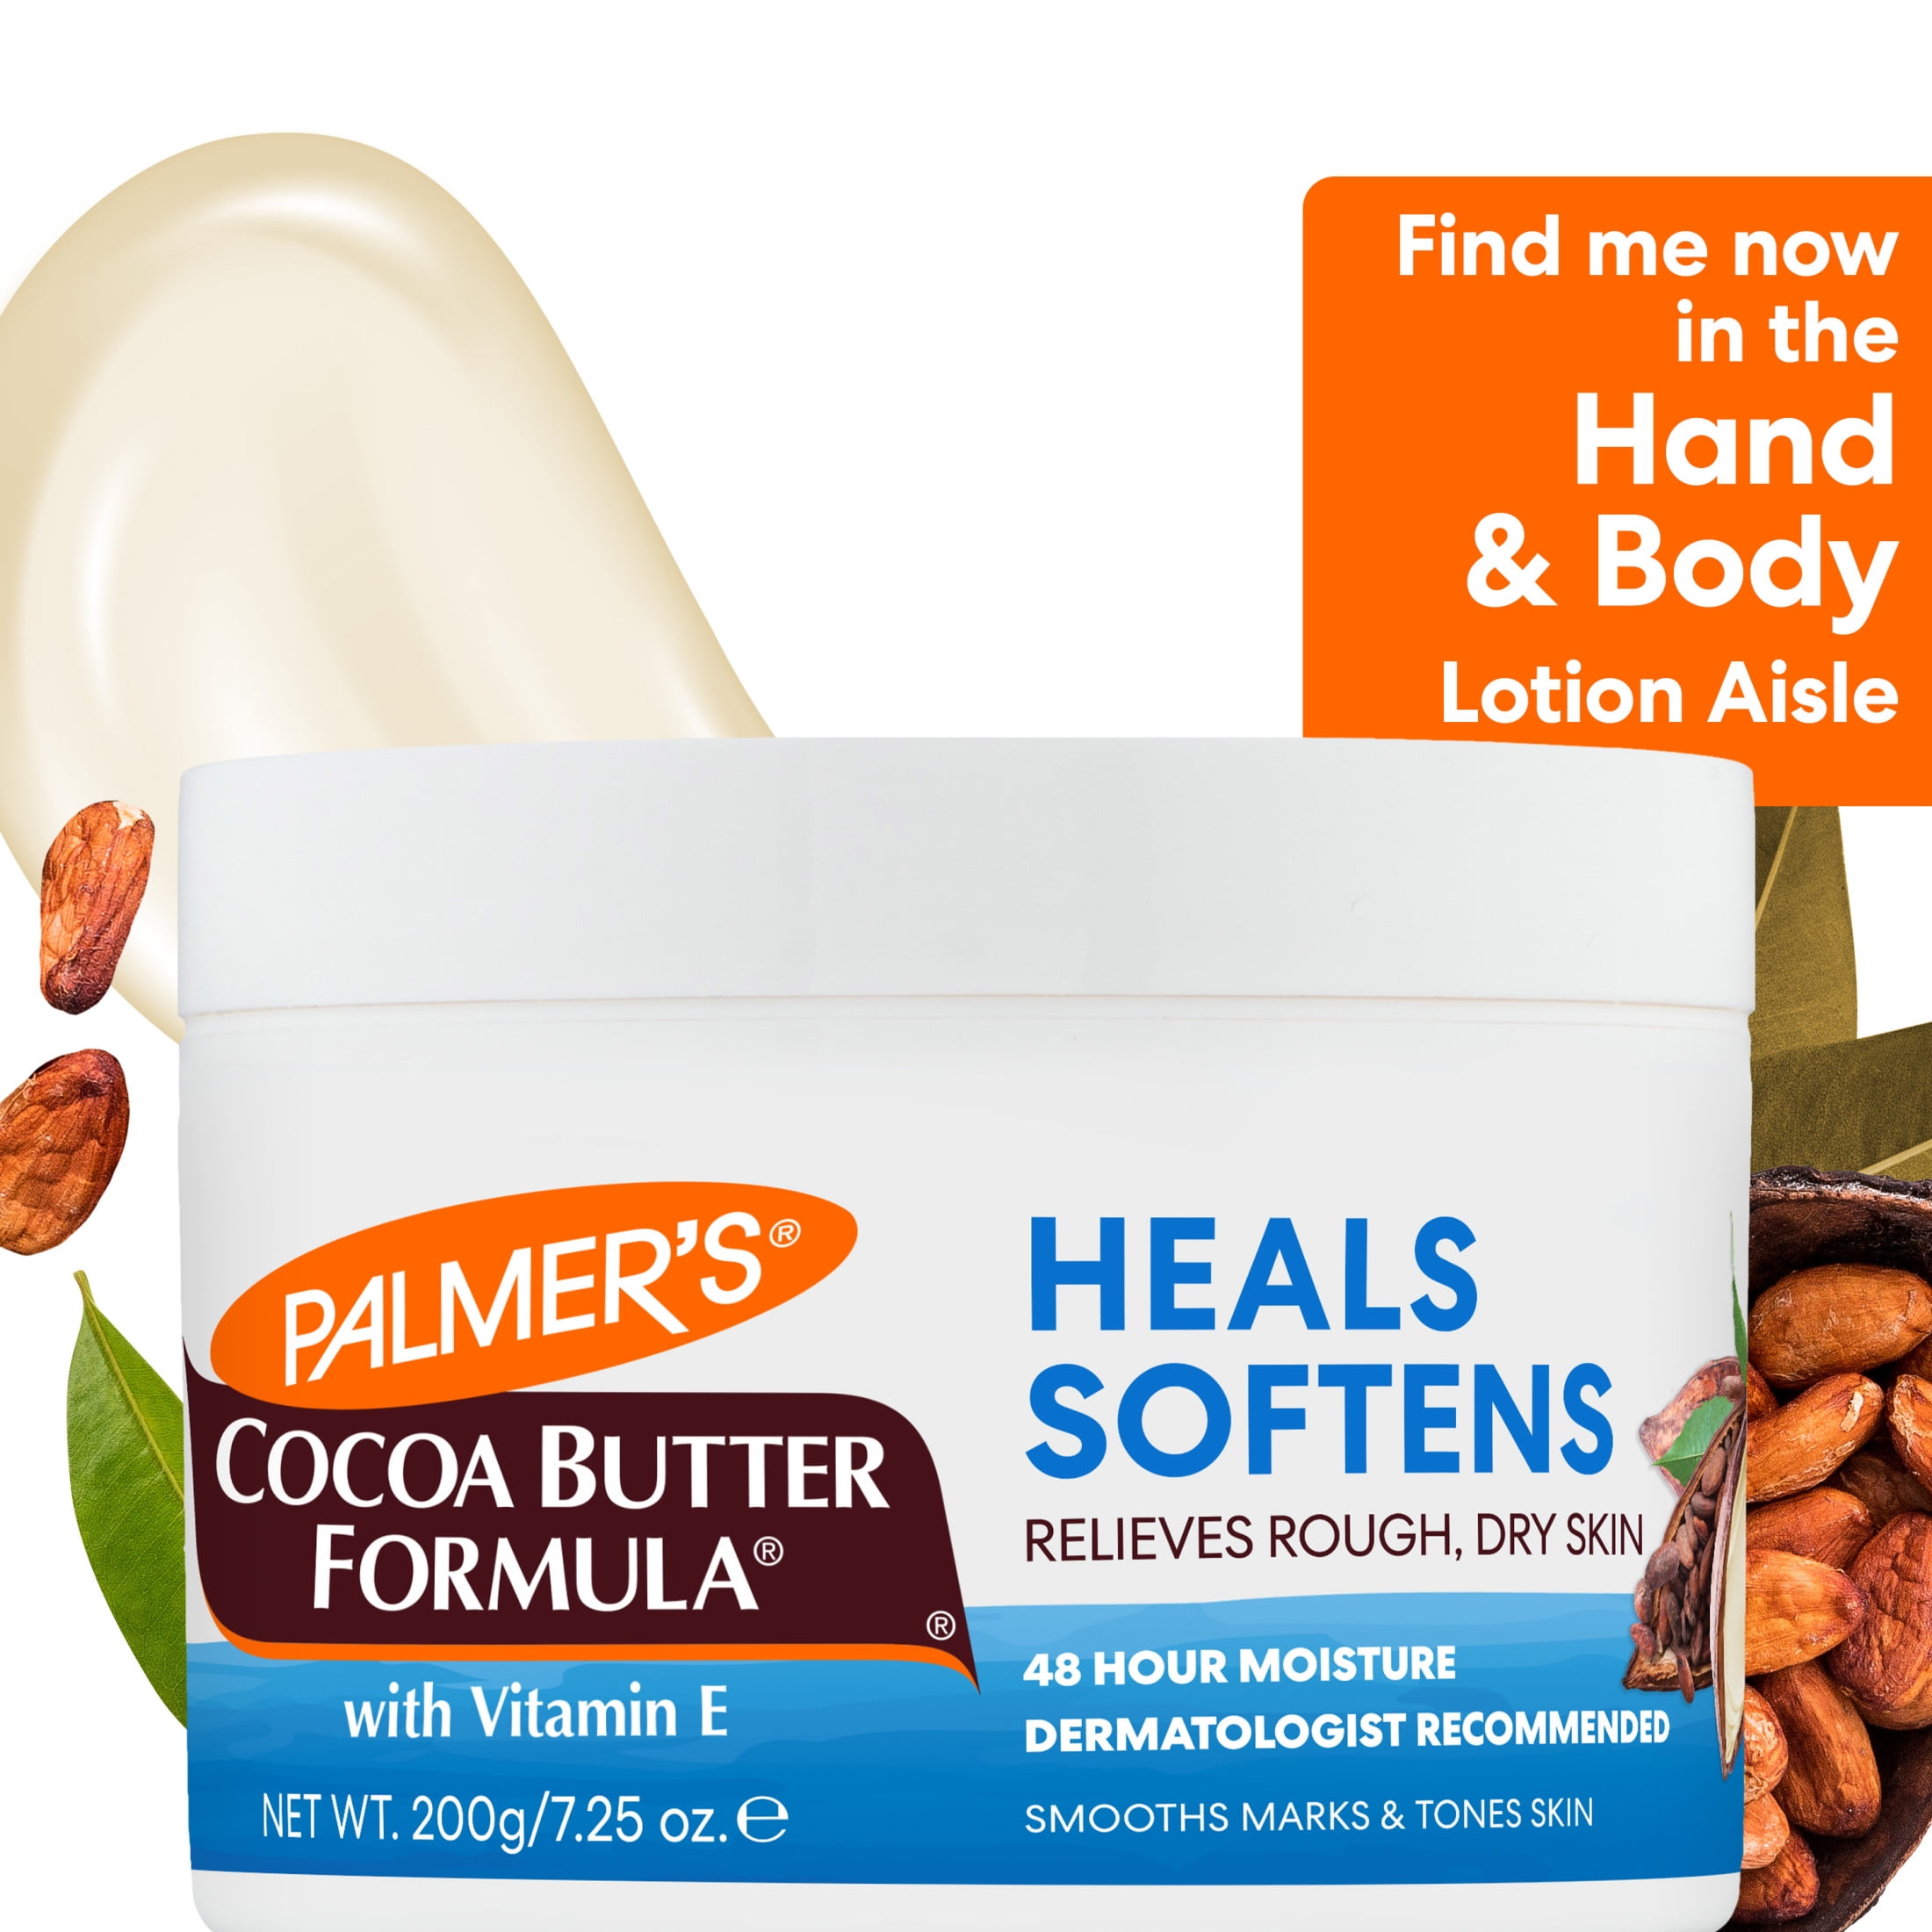 Raw Cocoa Butter Bulk 55 Lbs , 100% Pure Natural Unrefined Organic,  Moisturizing Body Butter Premium Quality Bulk Wholesale. 